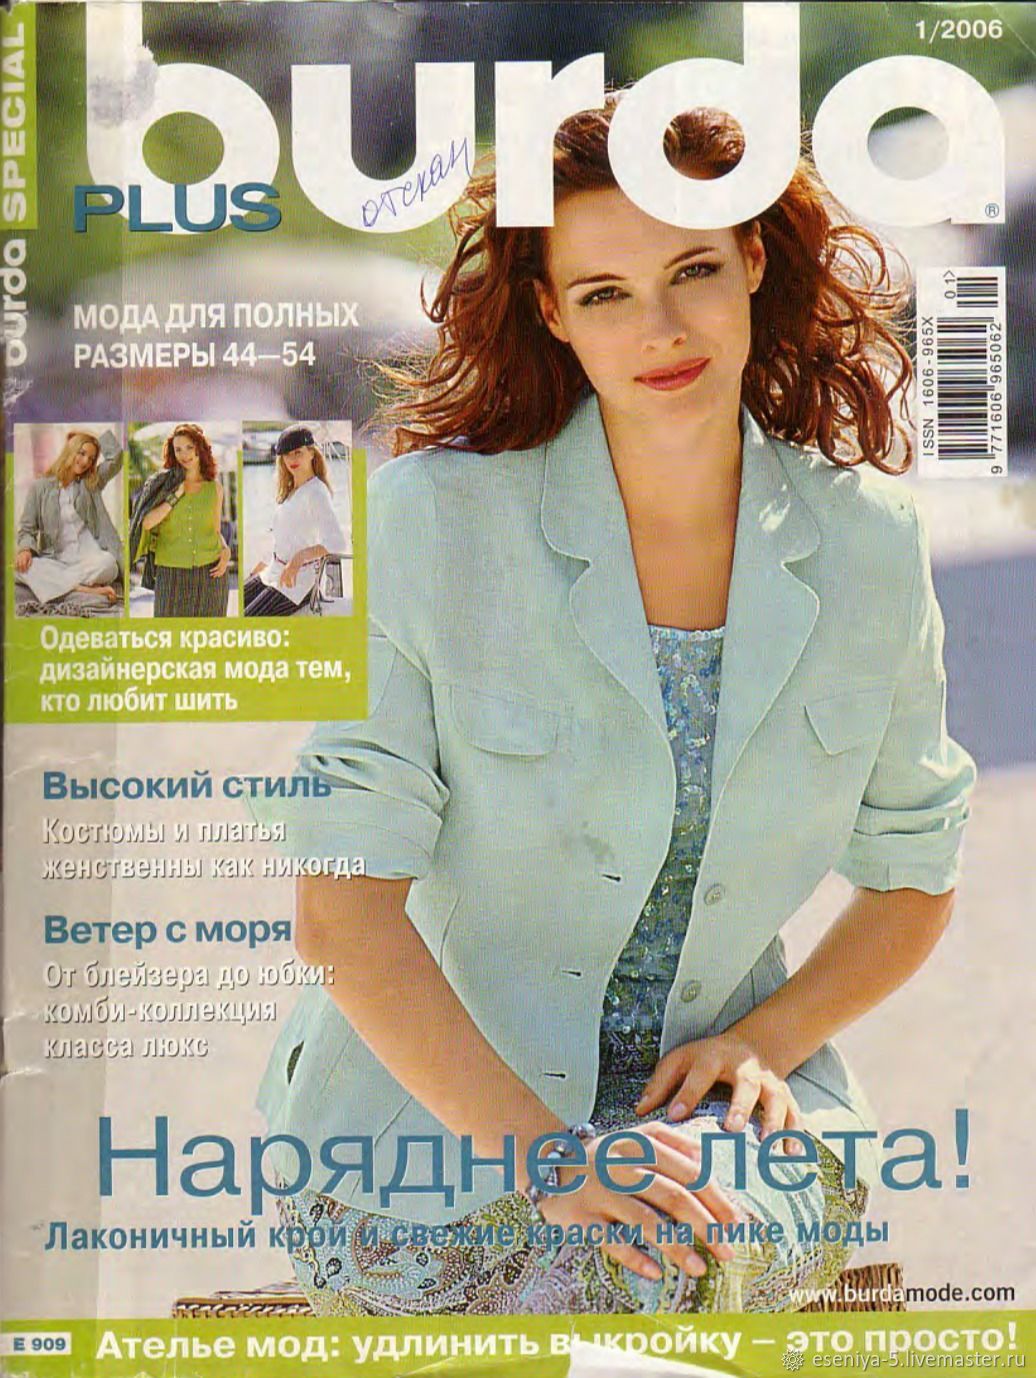 Burda Special Magazine for Full 1/2006 E909, Magazines, Moscow,  Фото №1